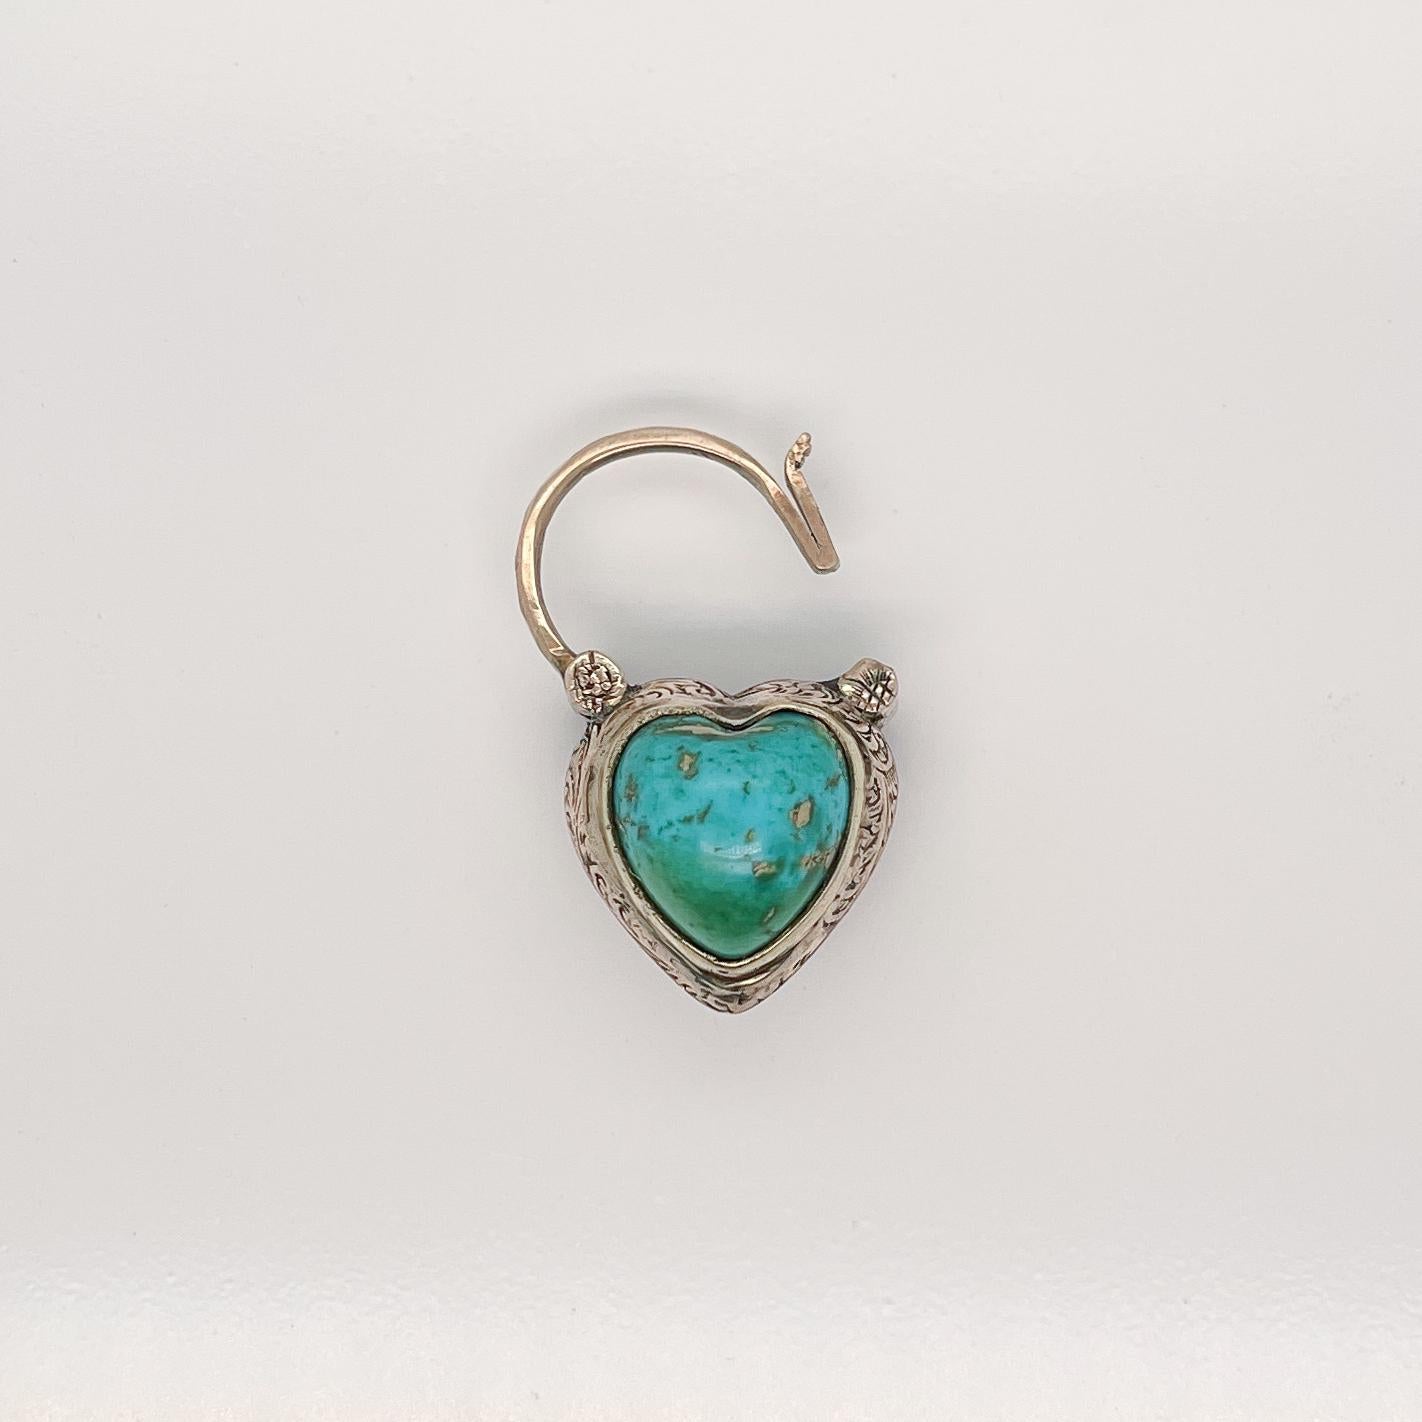 Victorian 14k Gold, Turquoise, Opal & Garnet Heart Shaped Lock Charm or Pendant